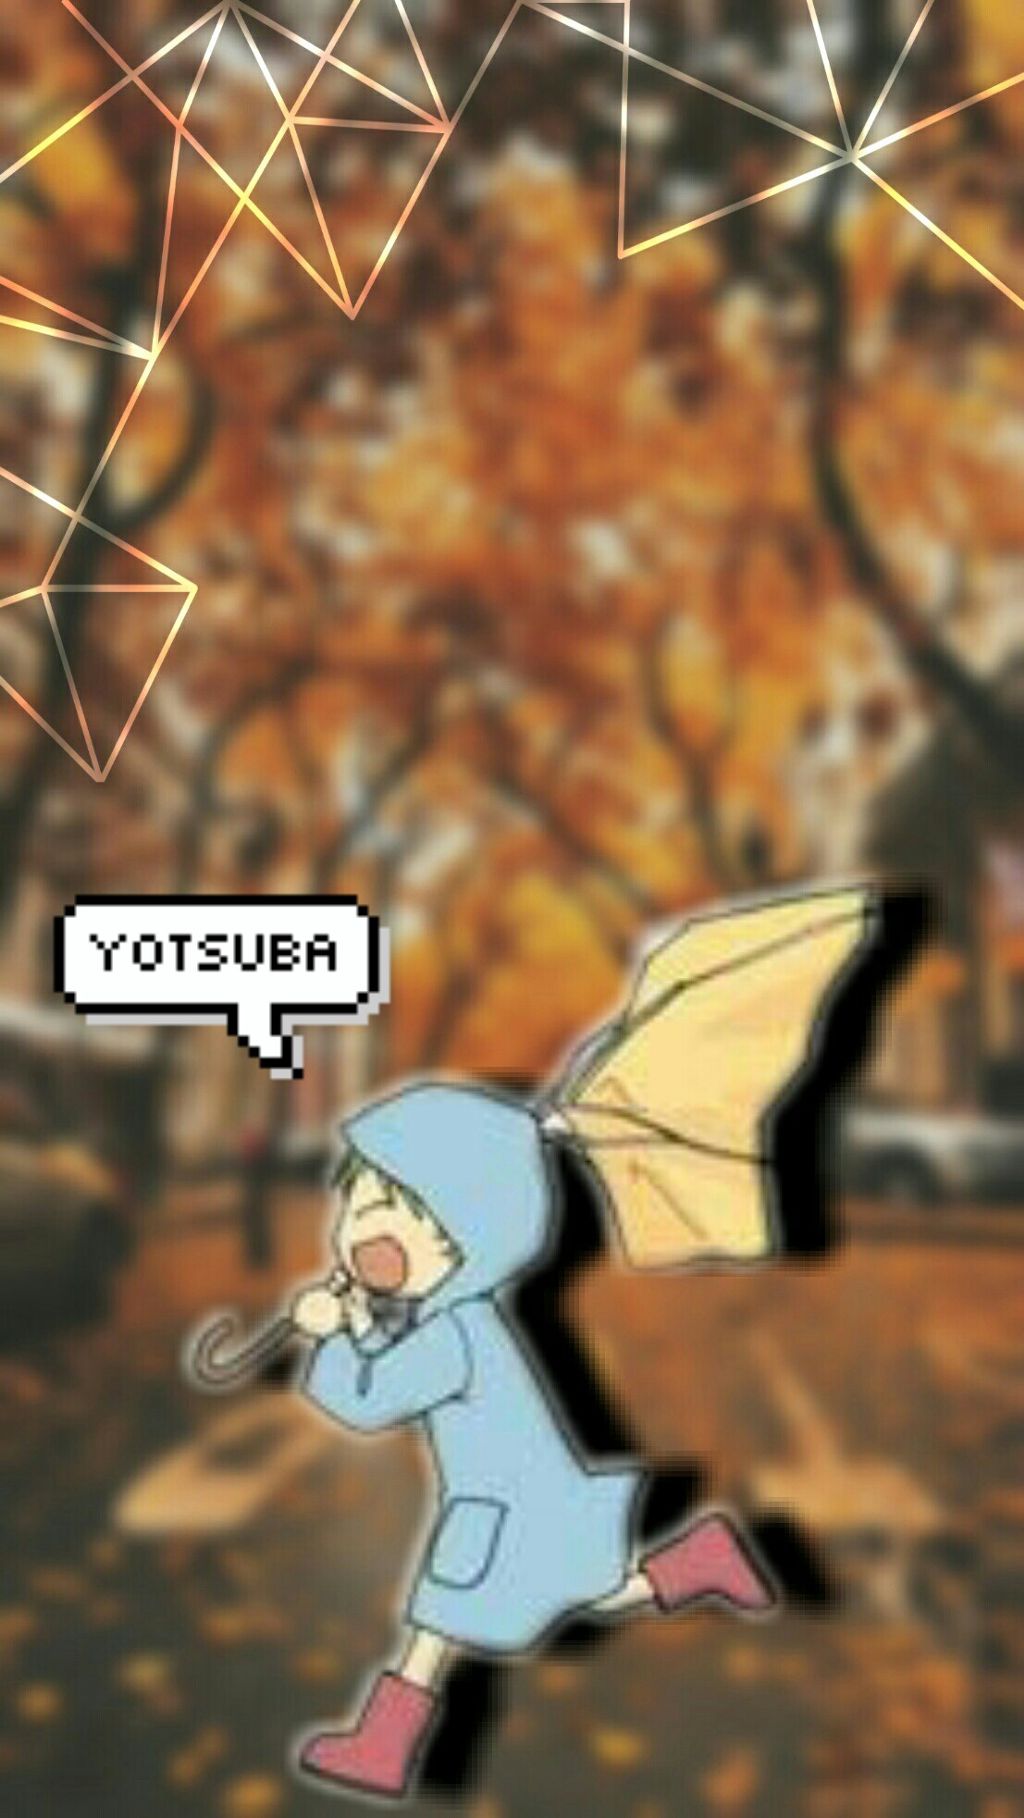 Yotsuba Phone Wallpaper 《autumn》 Made By Me - Autumn , HD Wallpaper & Backgrounds